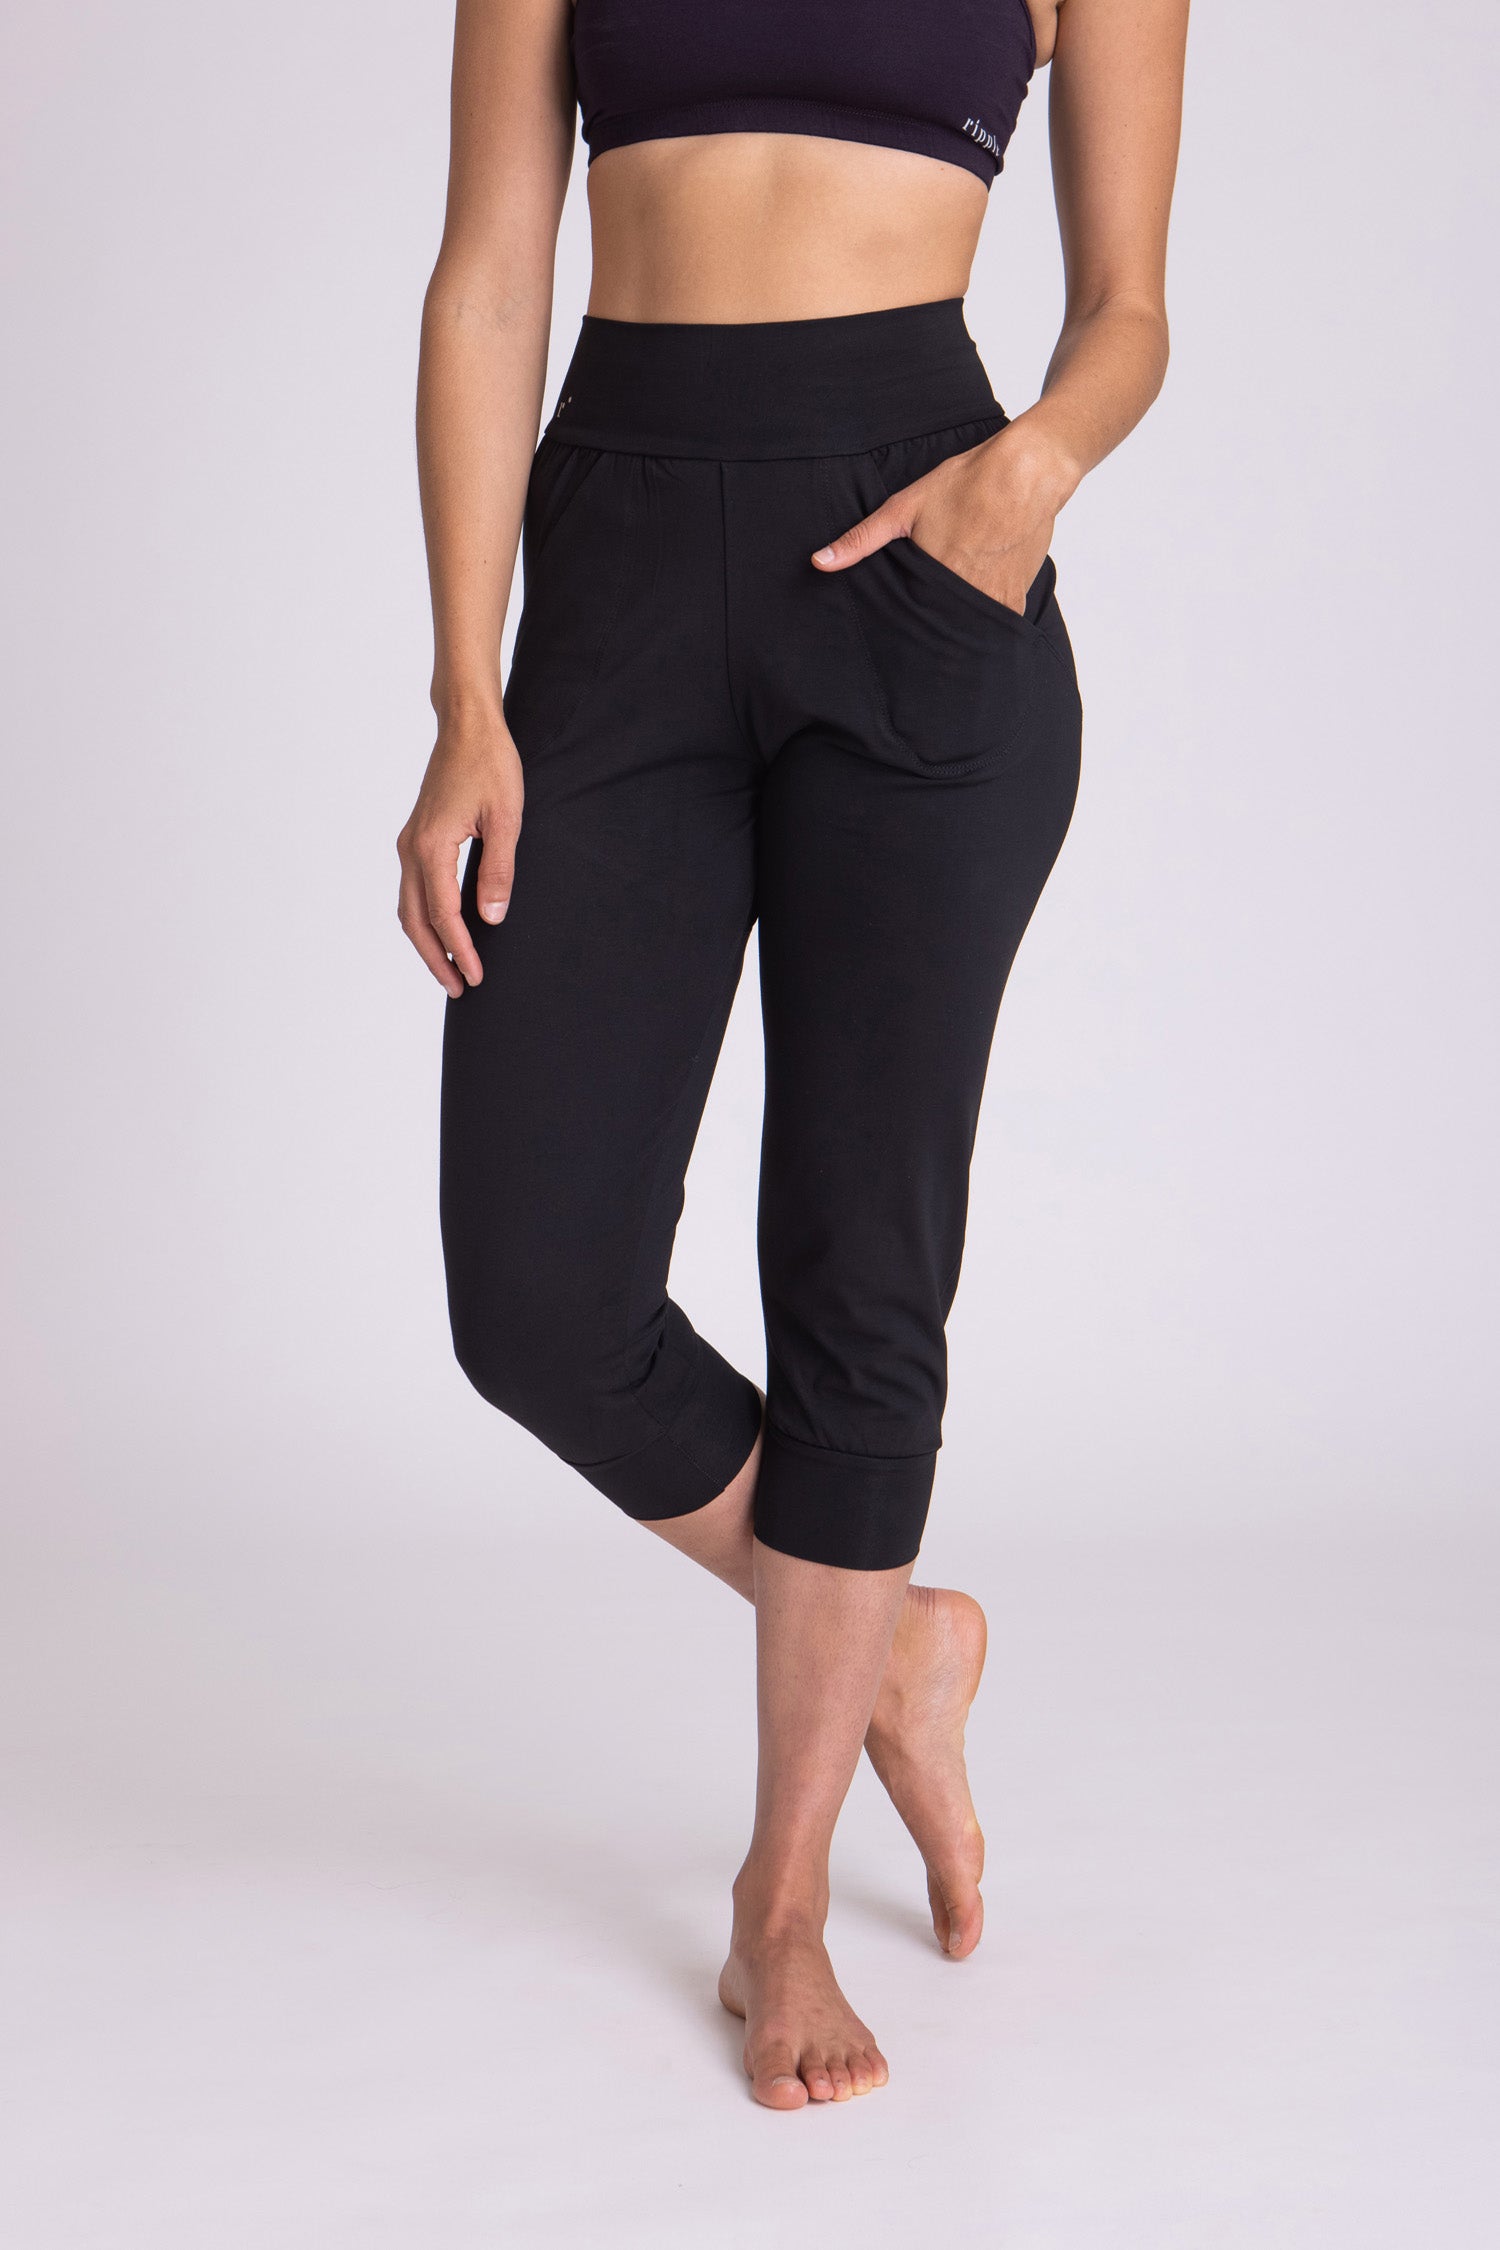 Black Organic Cotton Leggings, Cropped Leggings, Yoga Pants, Best Leggings,  Organic Yoga Pants, Black Capri Leggings, Loungewear, Eco Pants 